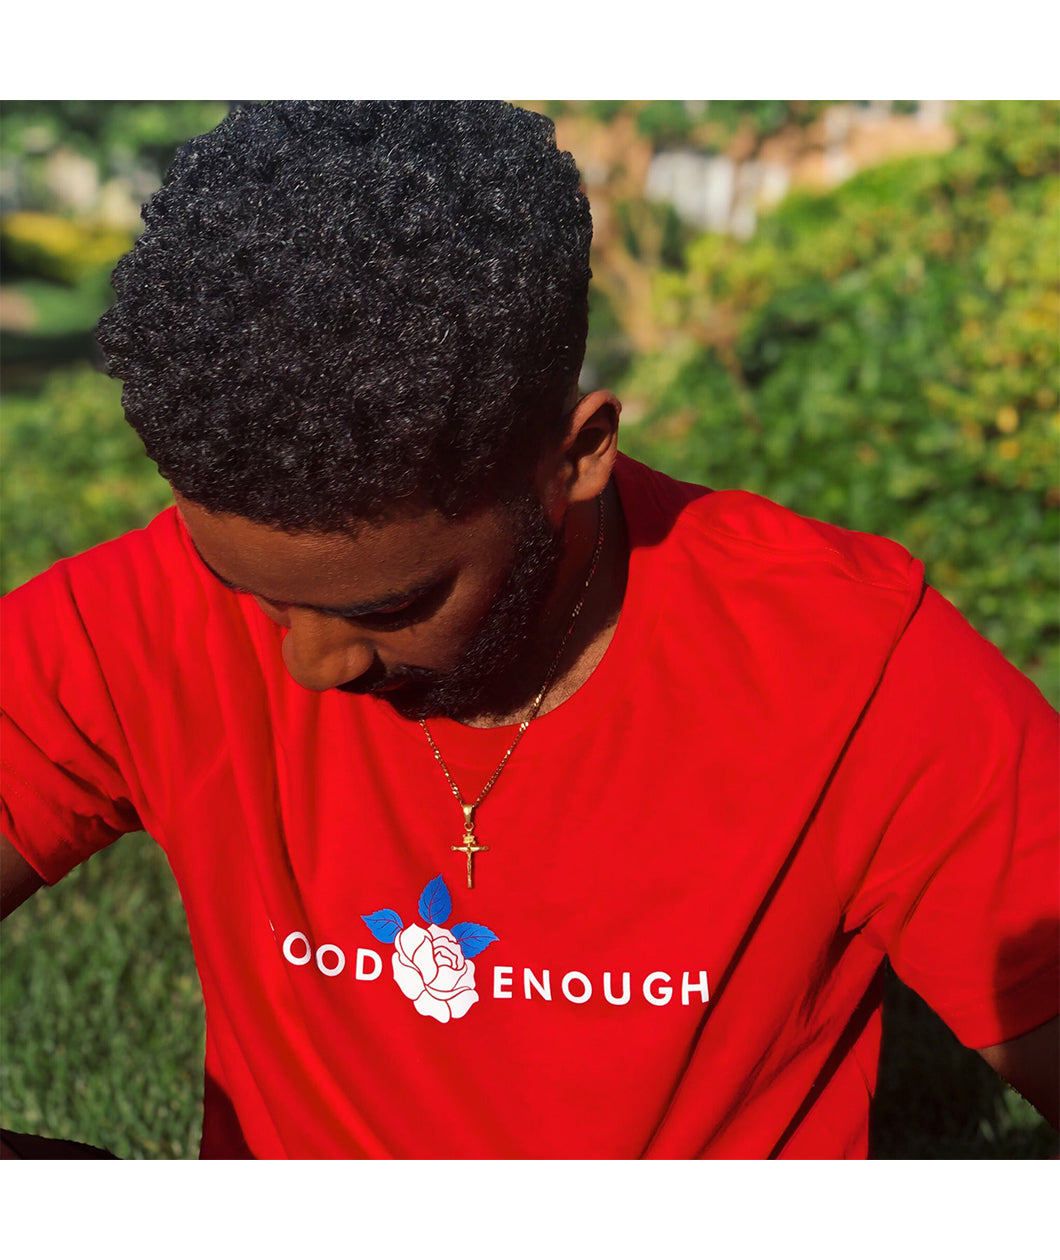 Good Enough (Red) Shirt